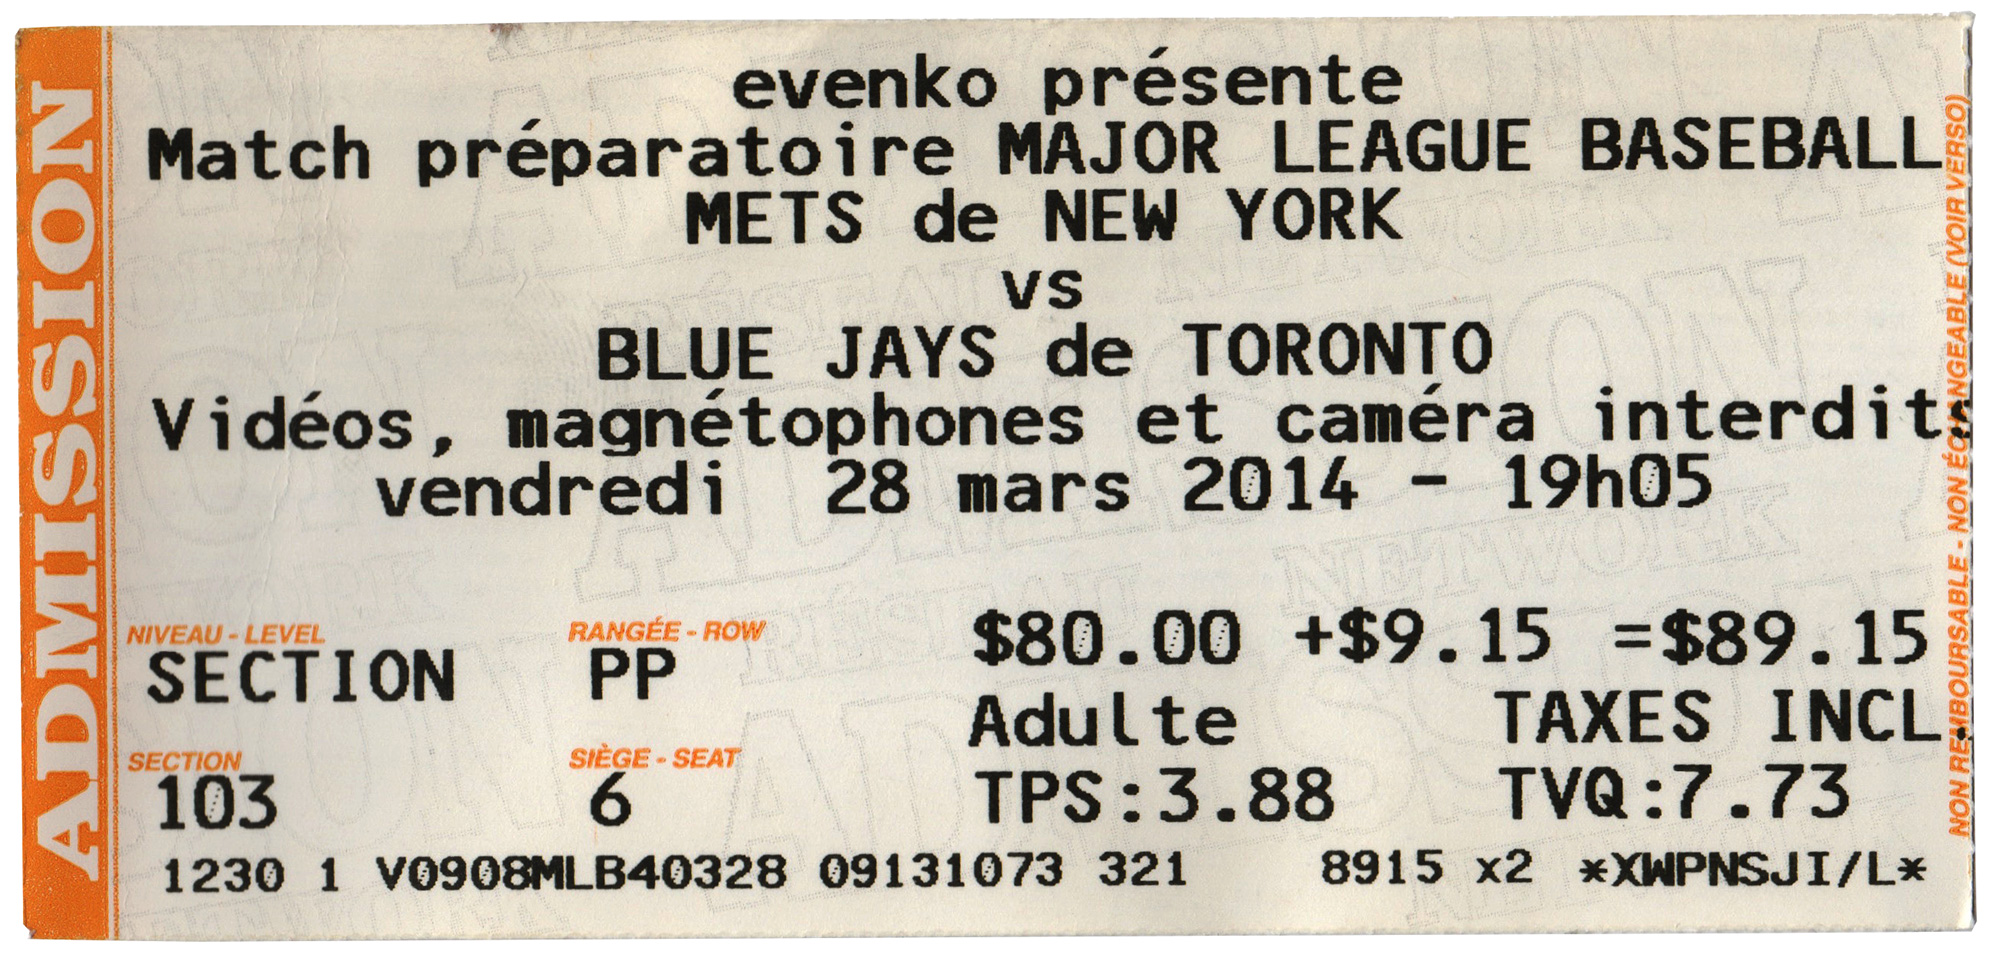 New York Mets 4 – Toronto Blue Jays 5